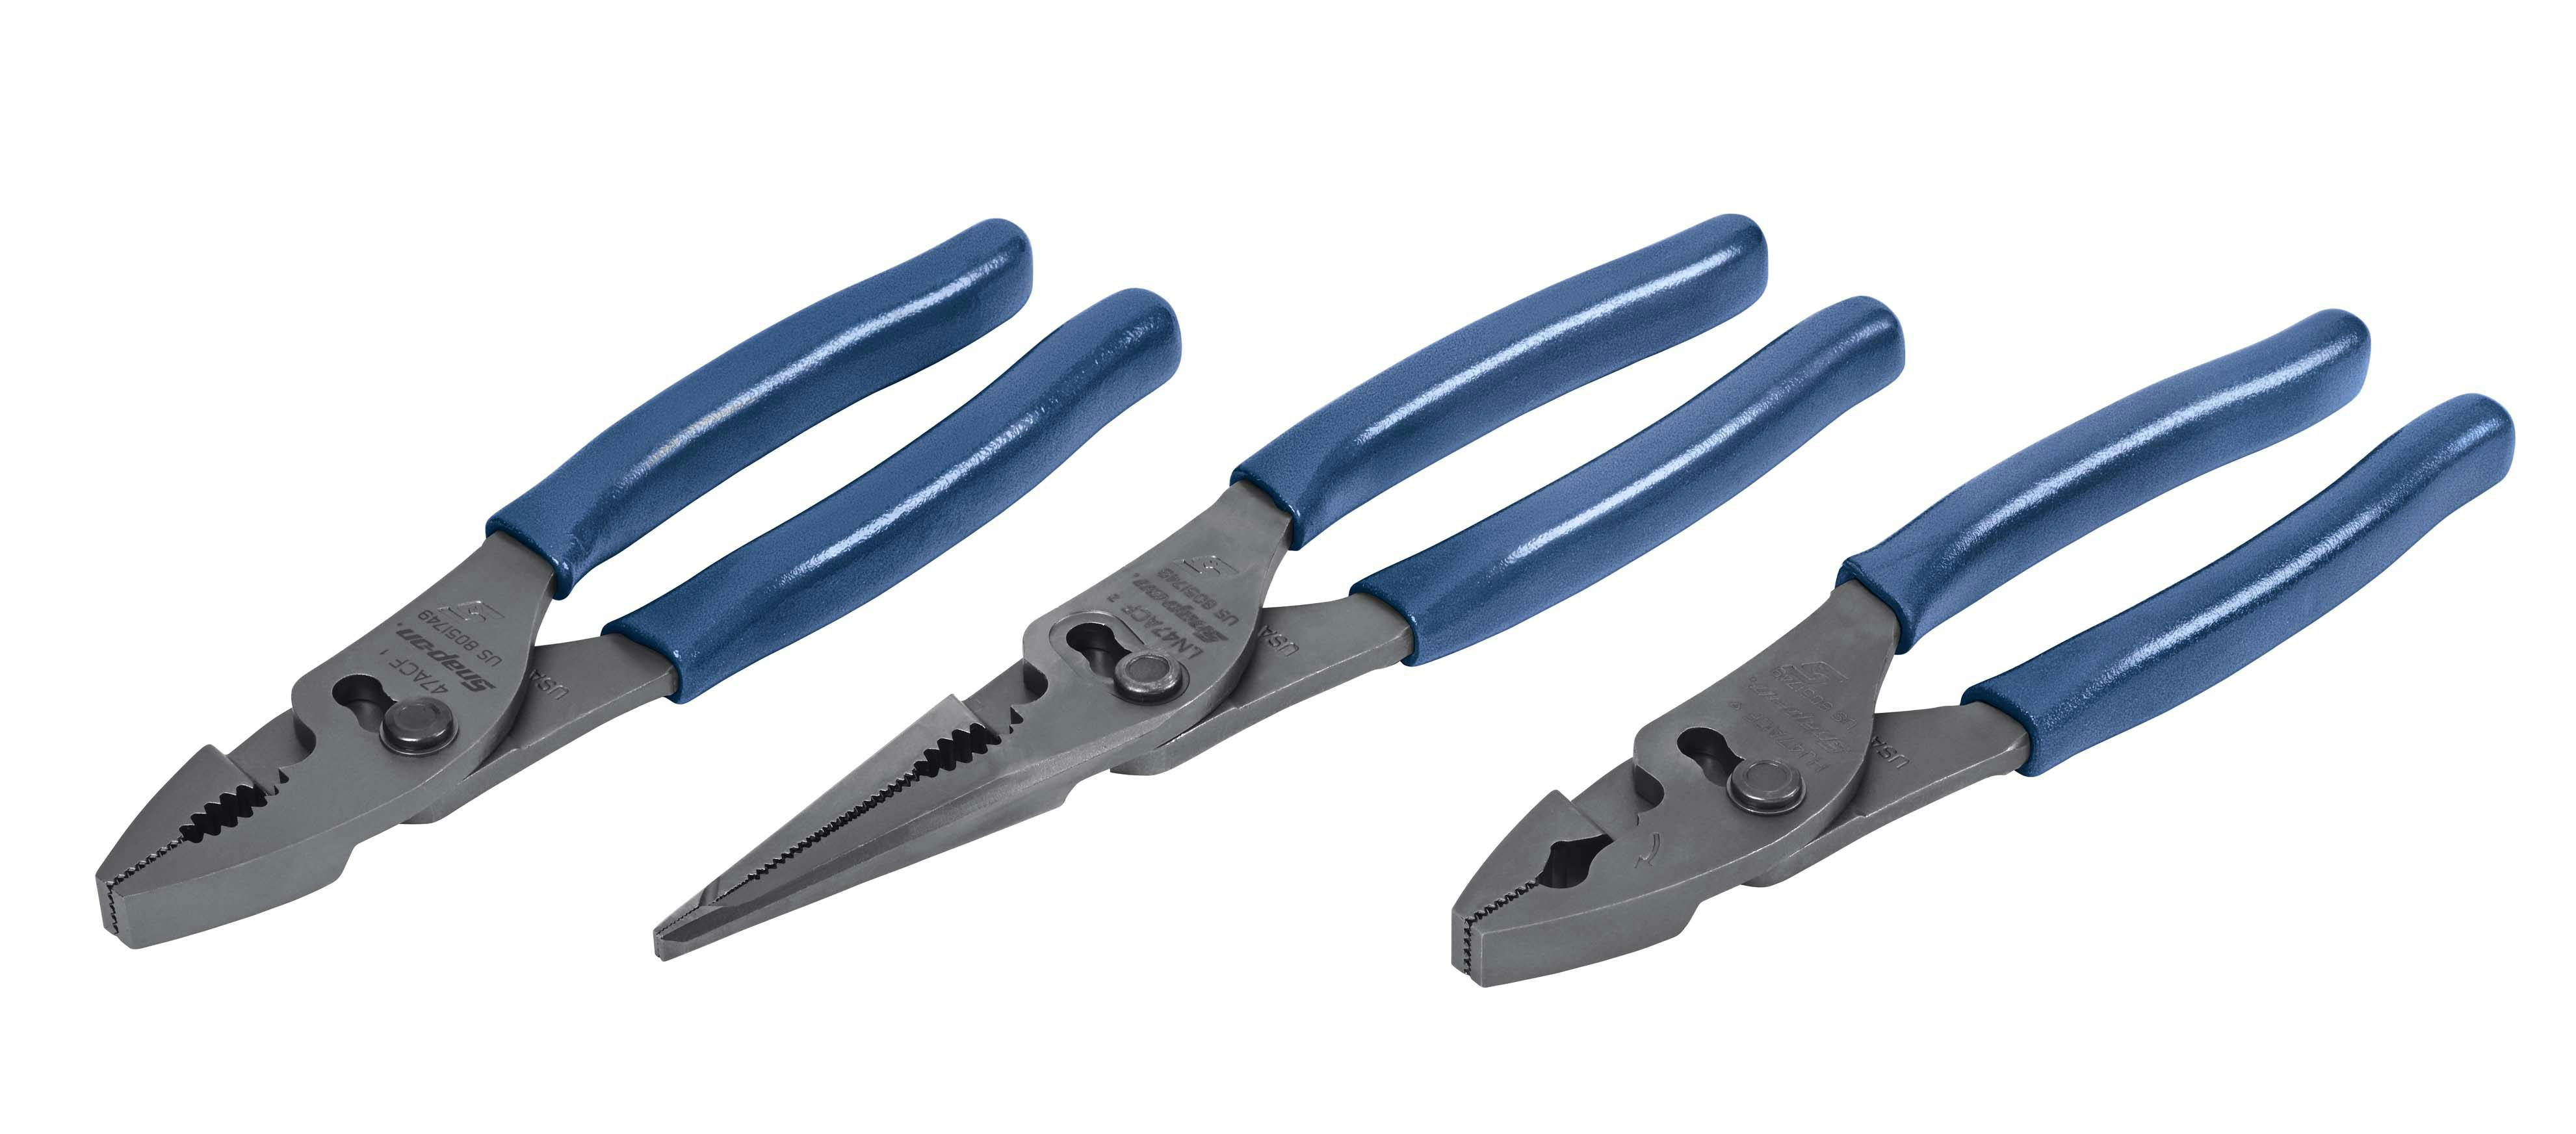 4 pc Soft Grip Locking Pliers Set (Blue-Point®), BSGLP404